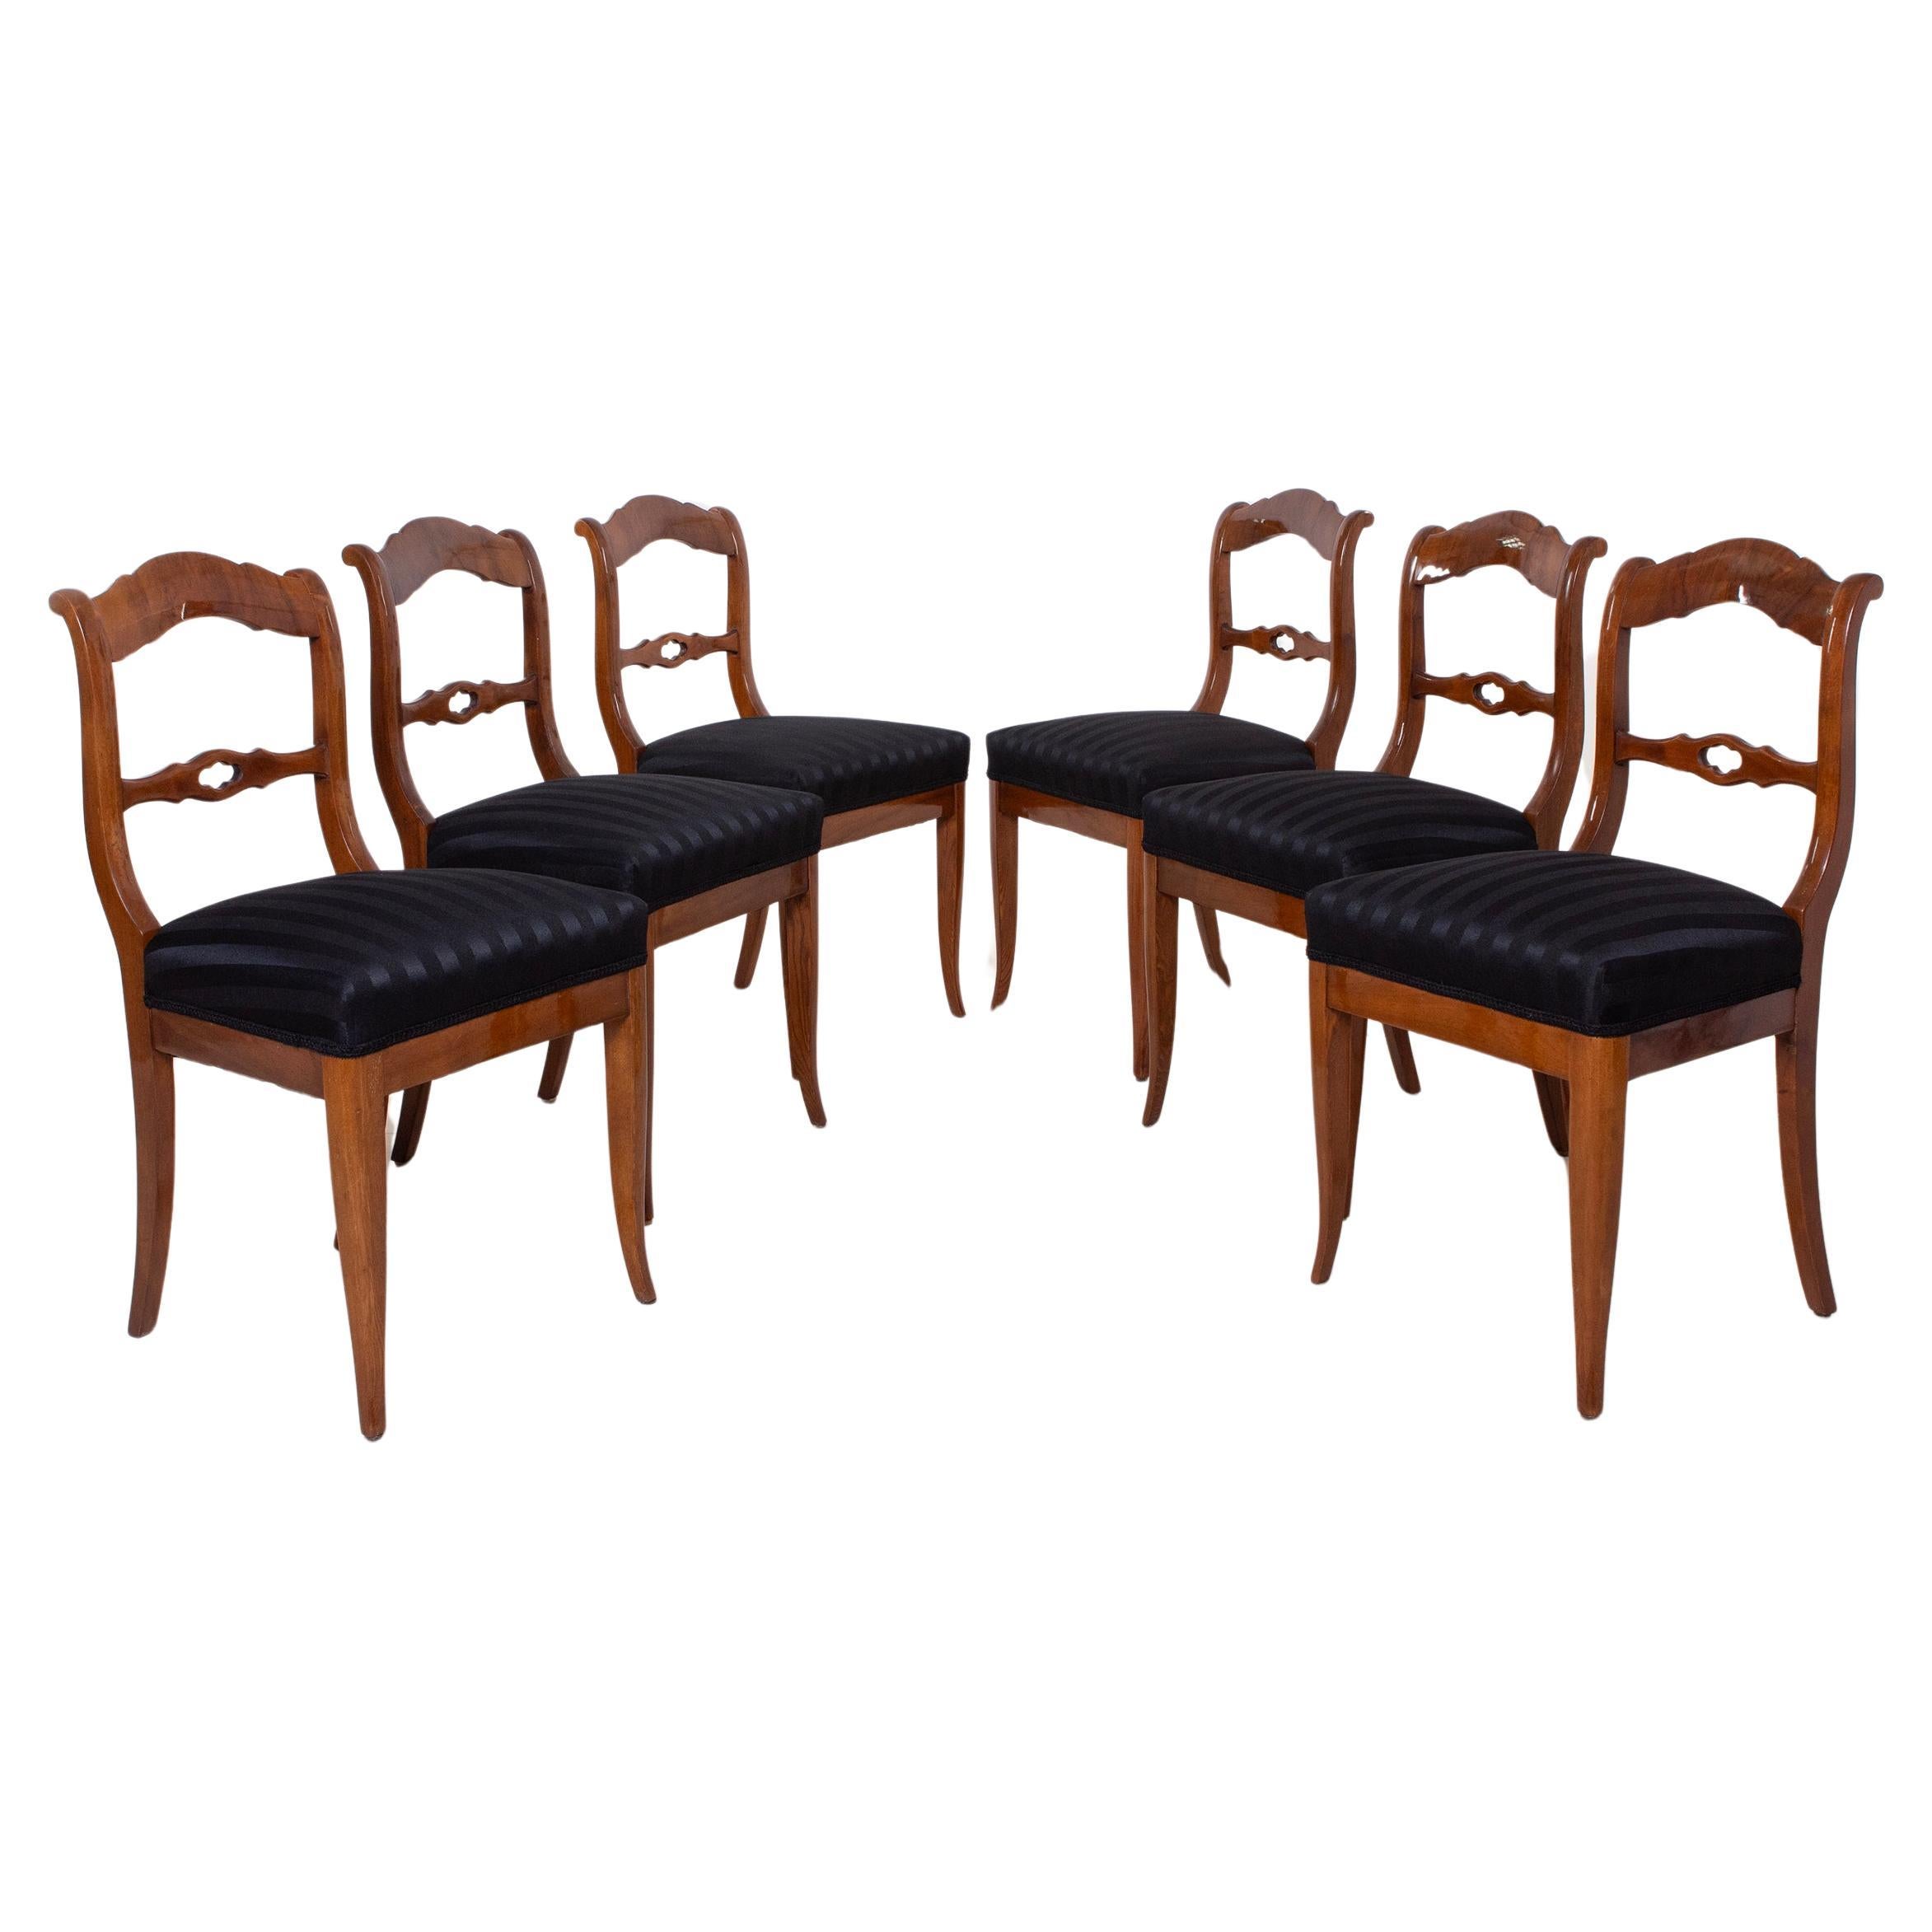 Set of 6 Biedermeier Elegant Black Chairs, Germany, 19th Century, Fully Restored For Sale